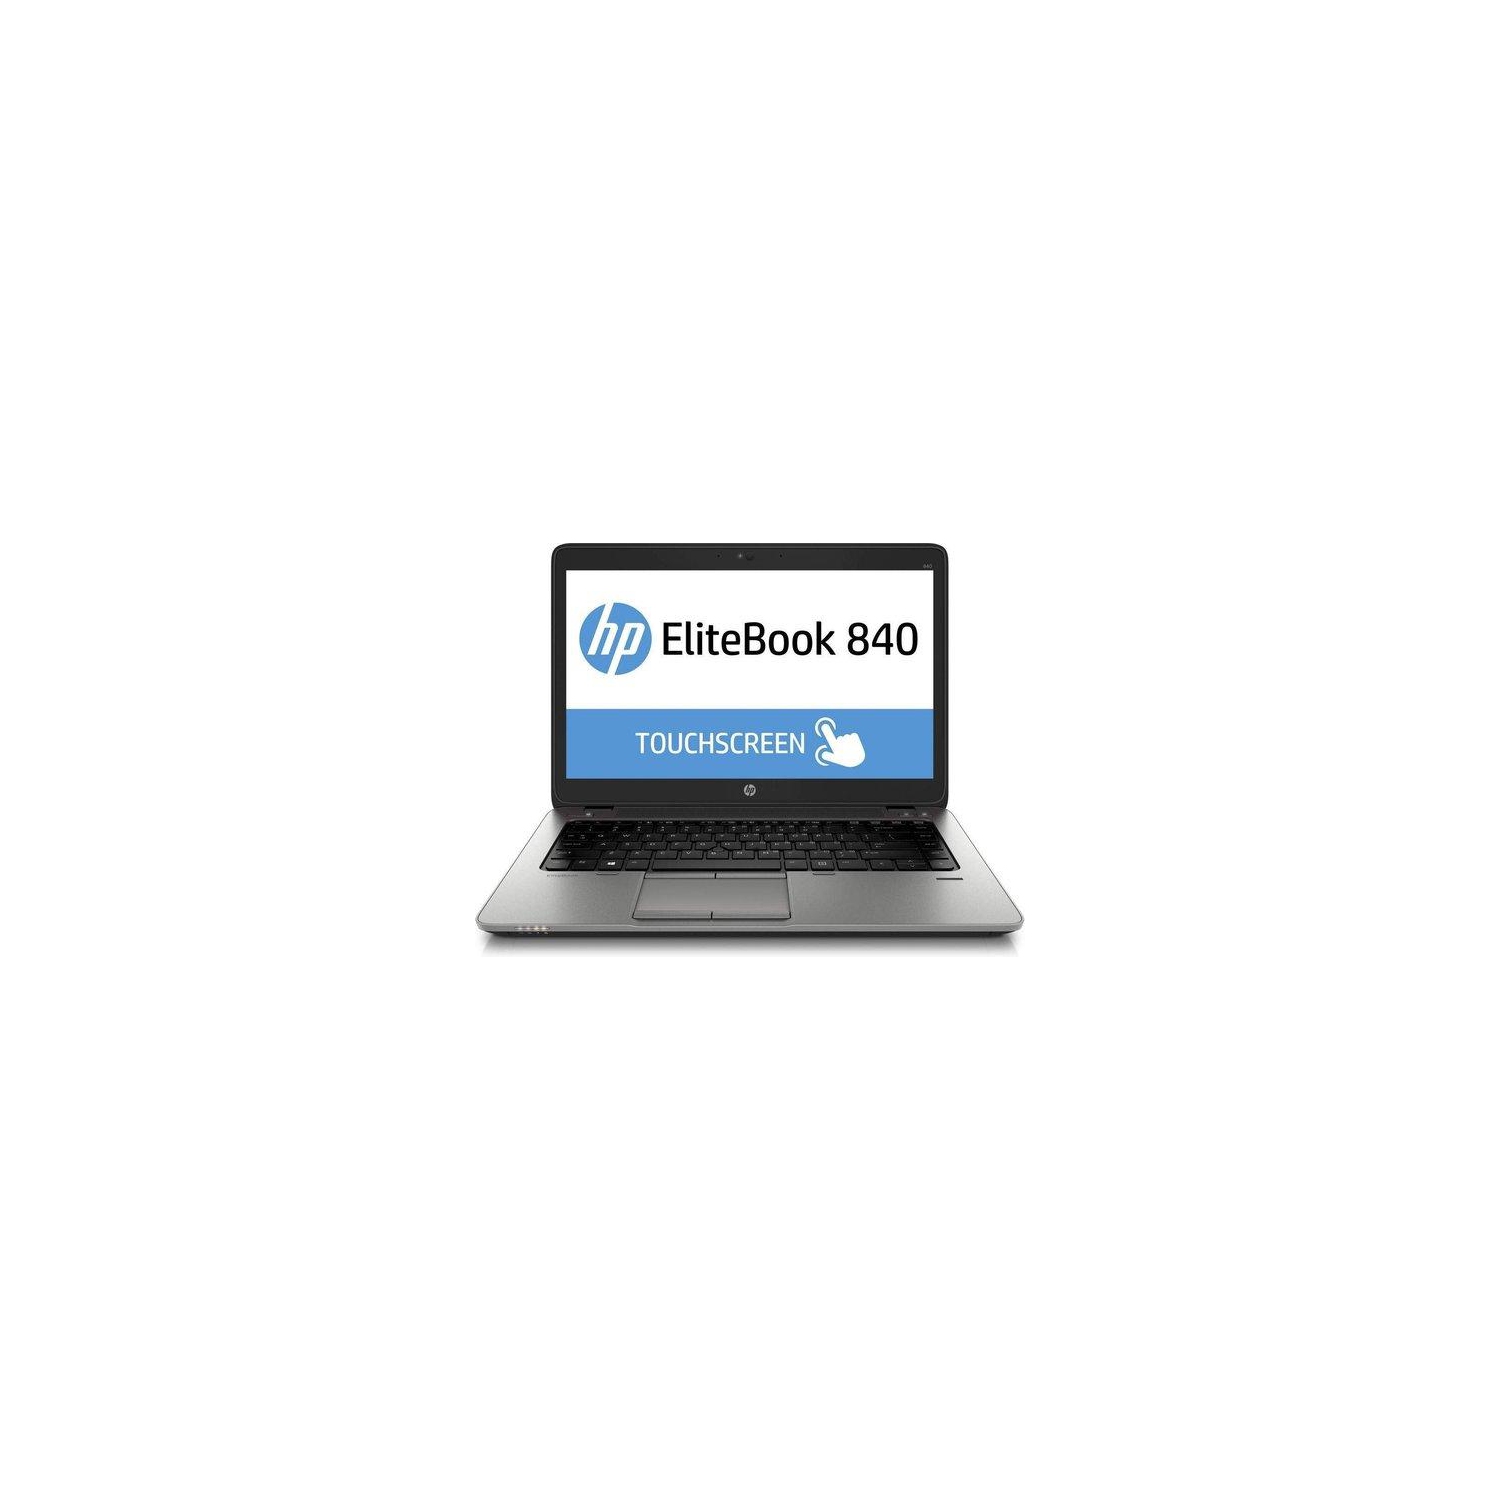 Refurbished (Good) - HP EliteBook 840 G3 14" FHD Business Laptop: i5-6200u 2.3GHz; 8G RAM; 256G SSD; Webcam; Backlit Keyboard, Win10 pro "â€œ